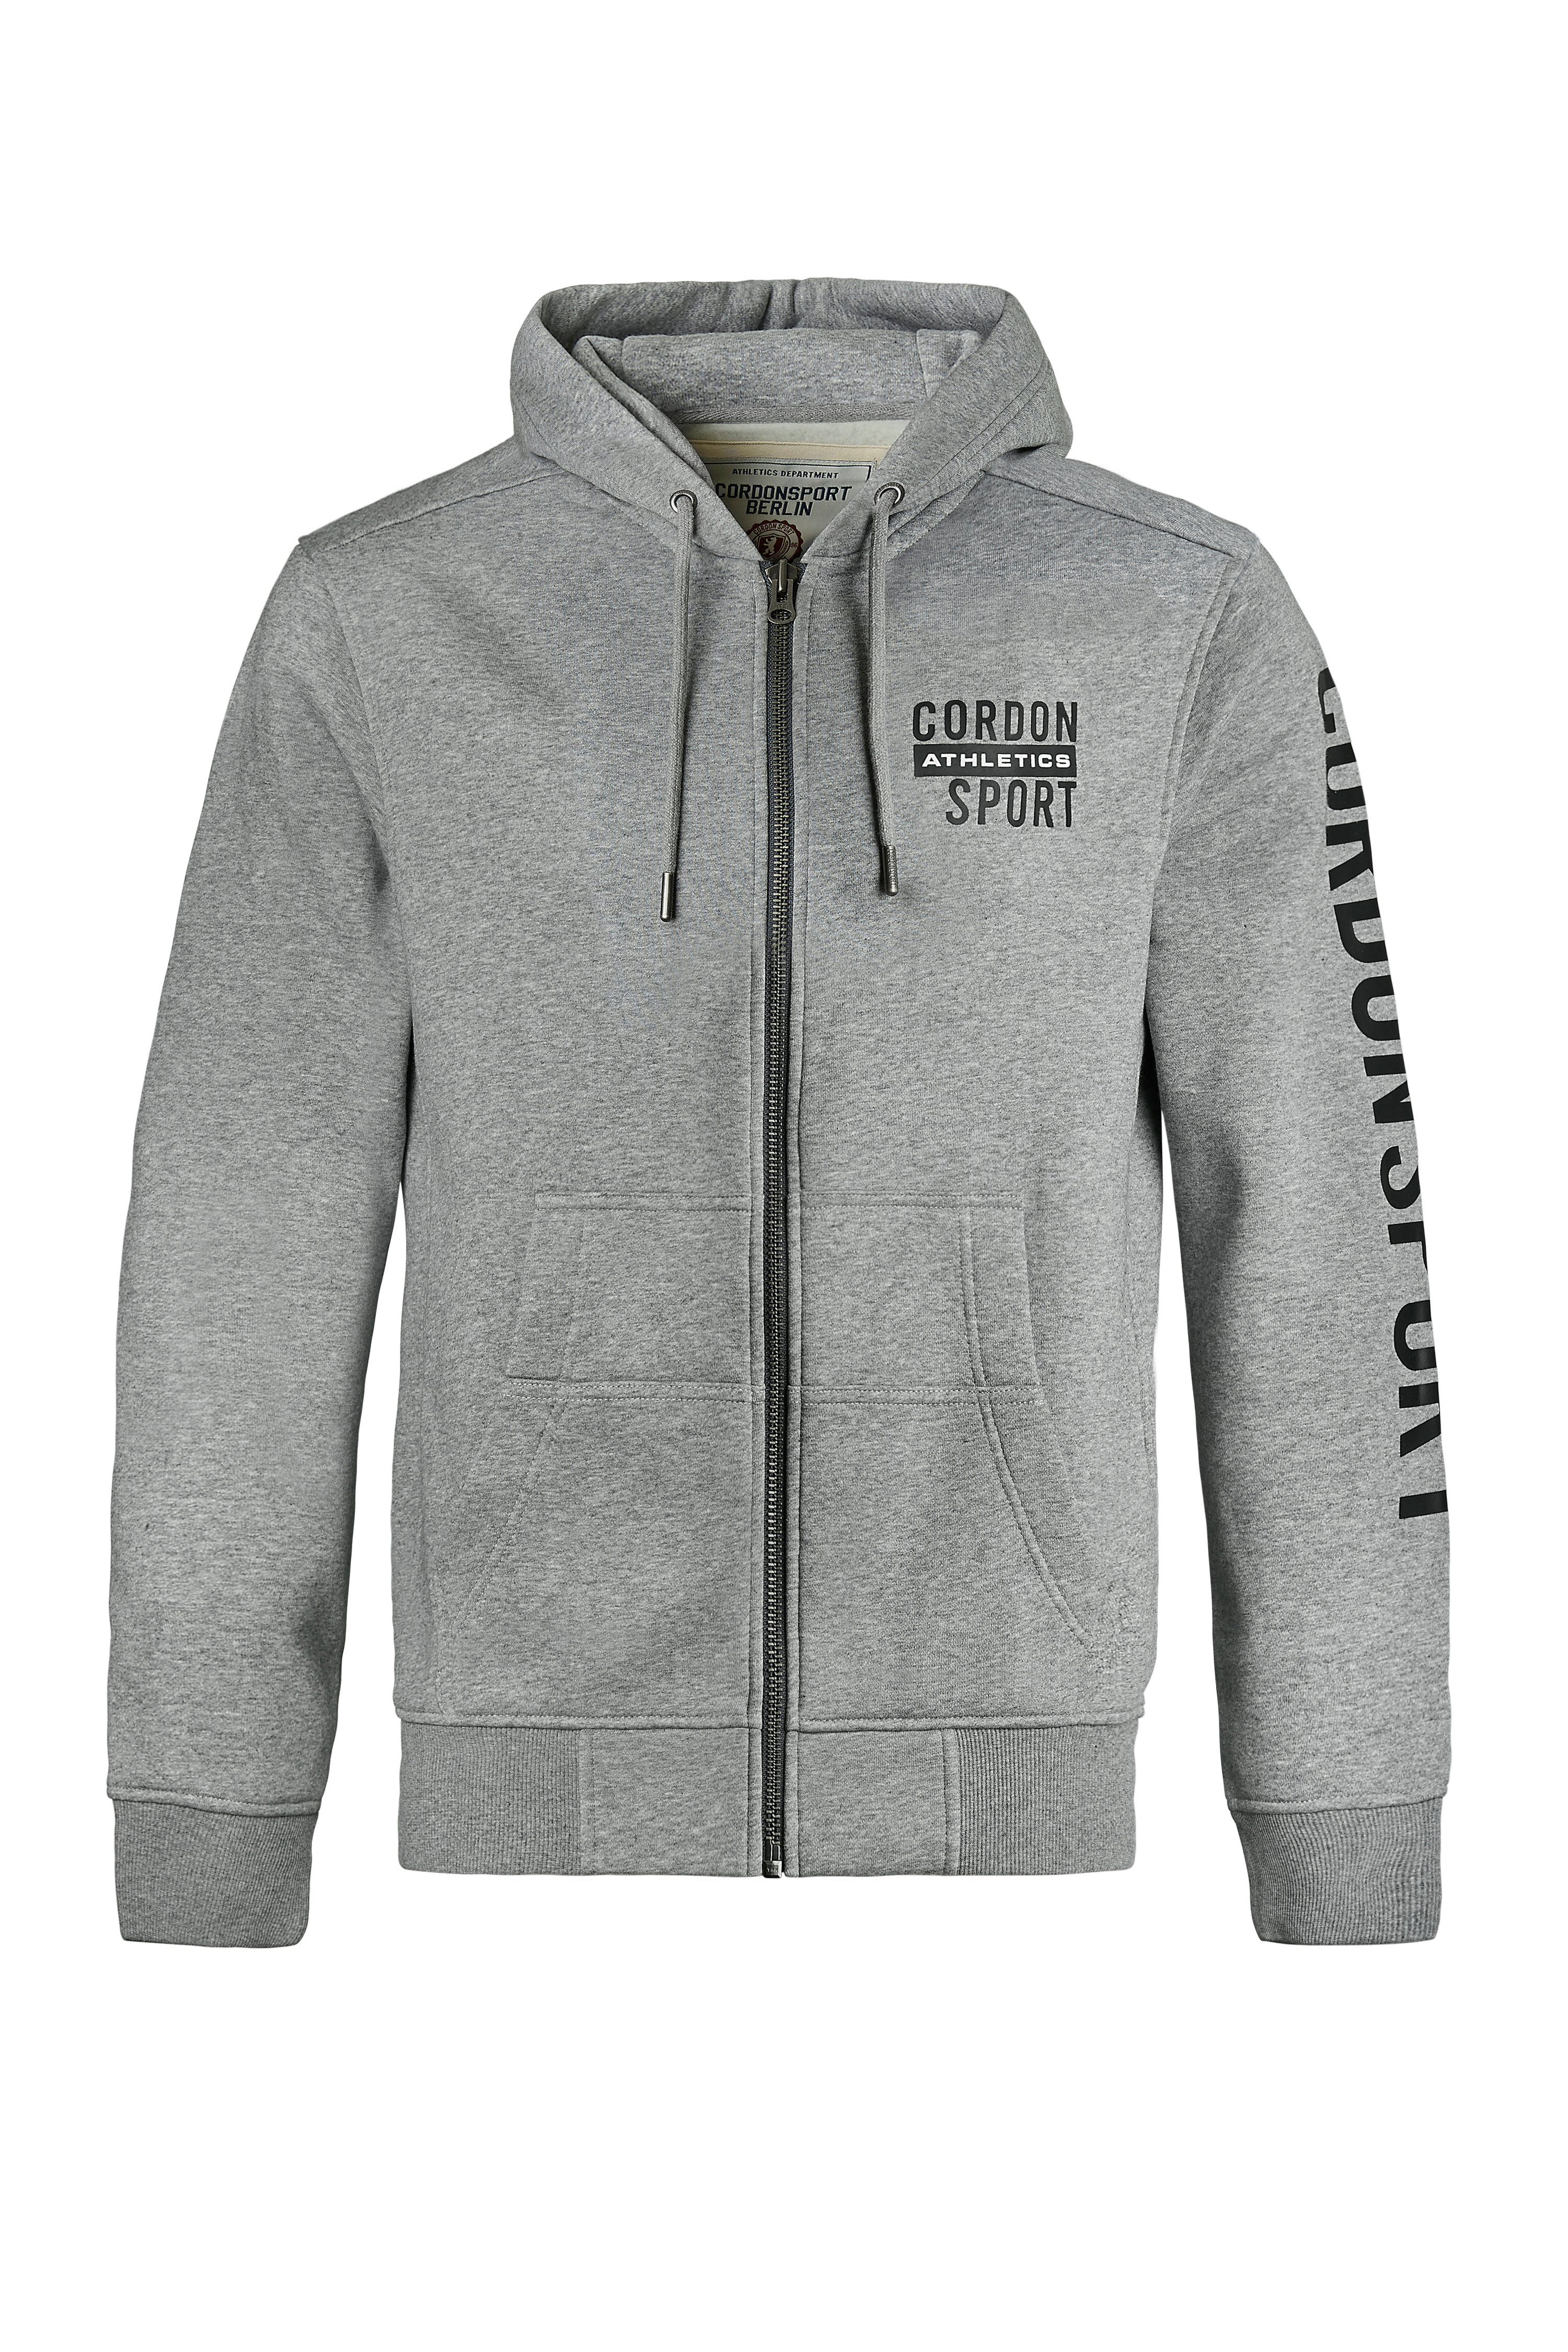 Cordon melange grey Hoodie 15 Sweatjacke Sport King 040